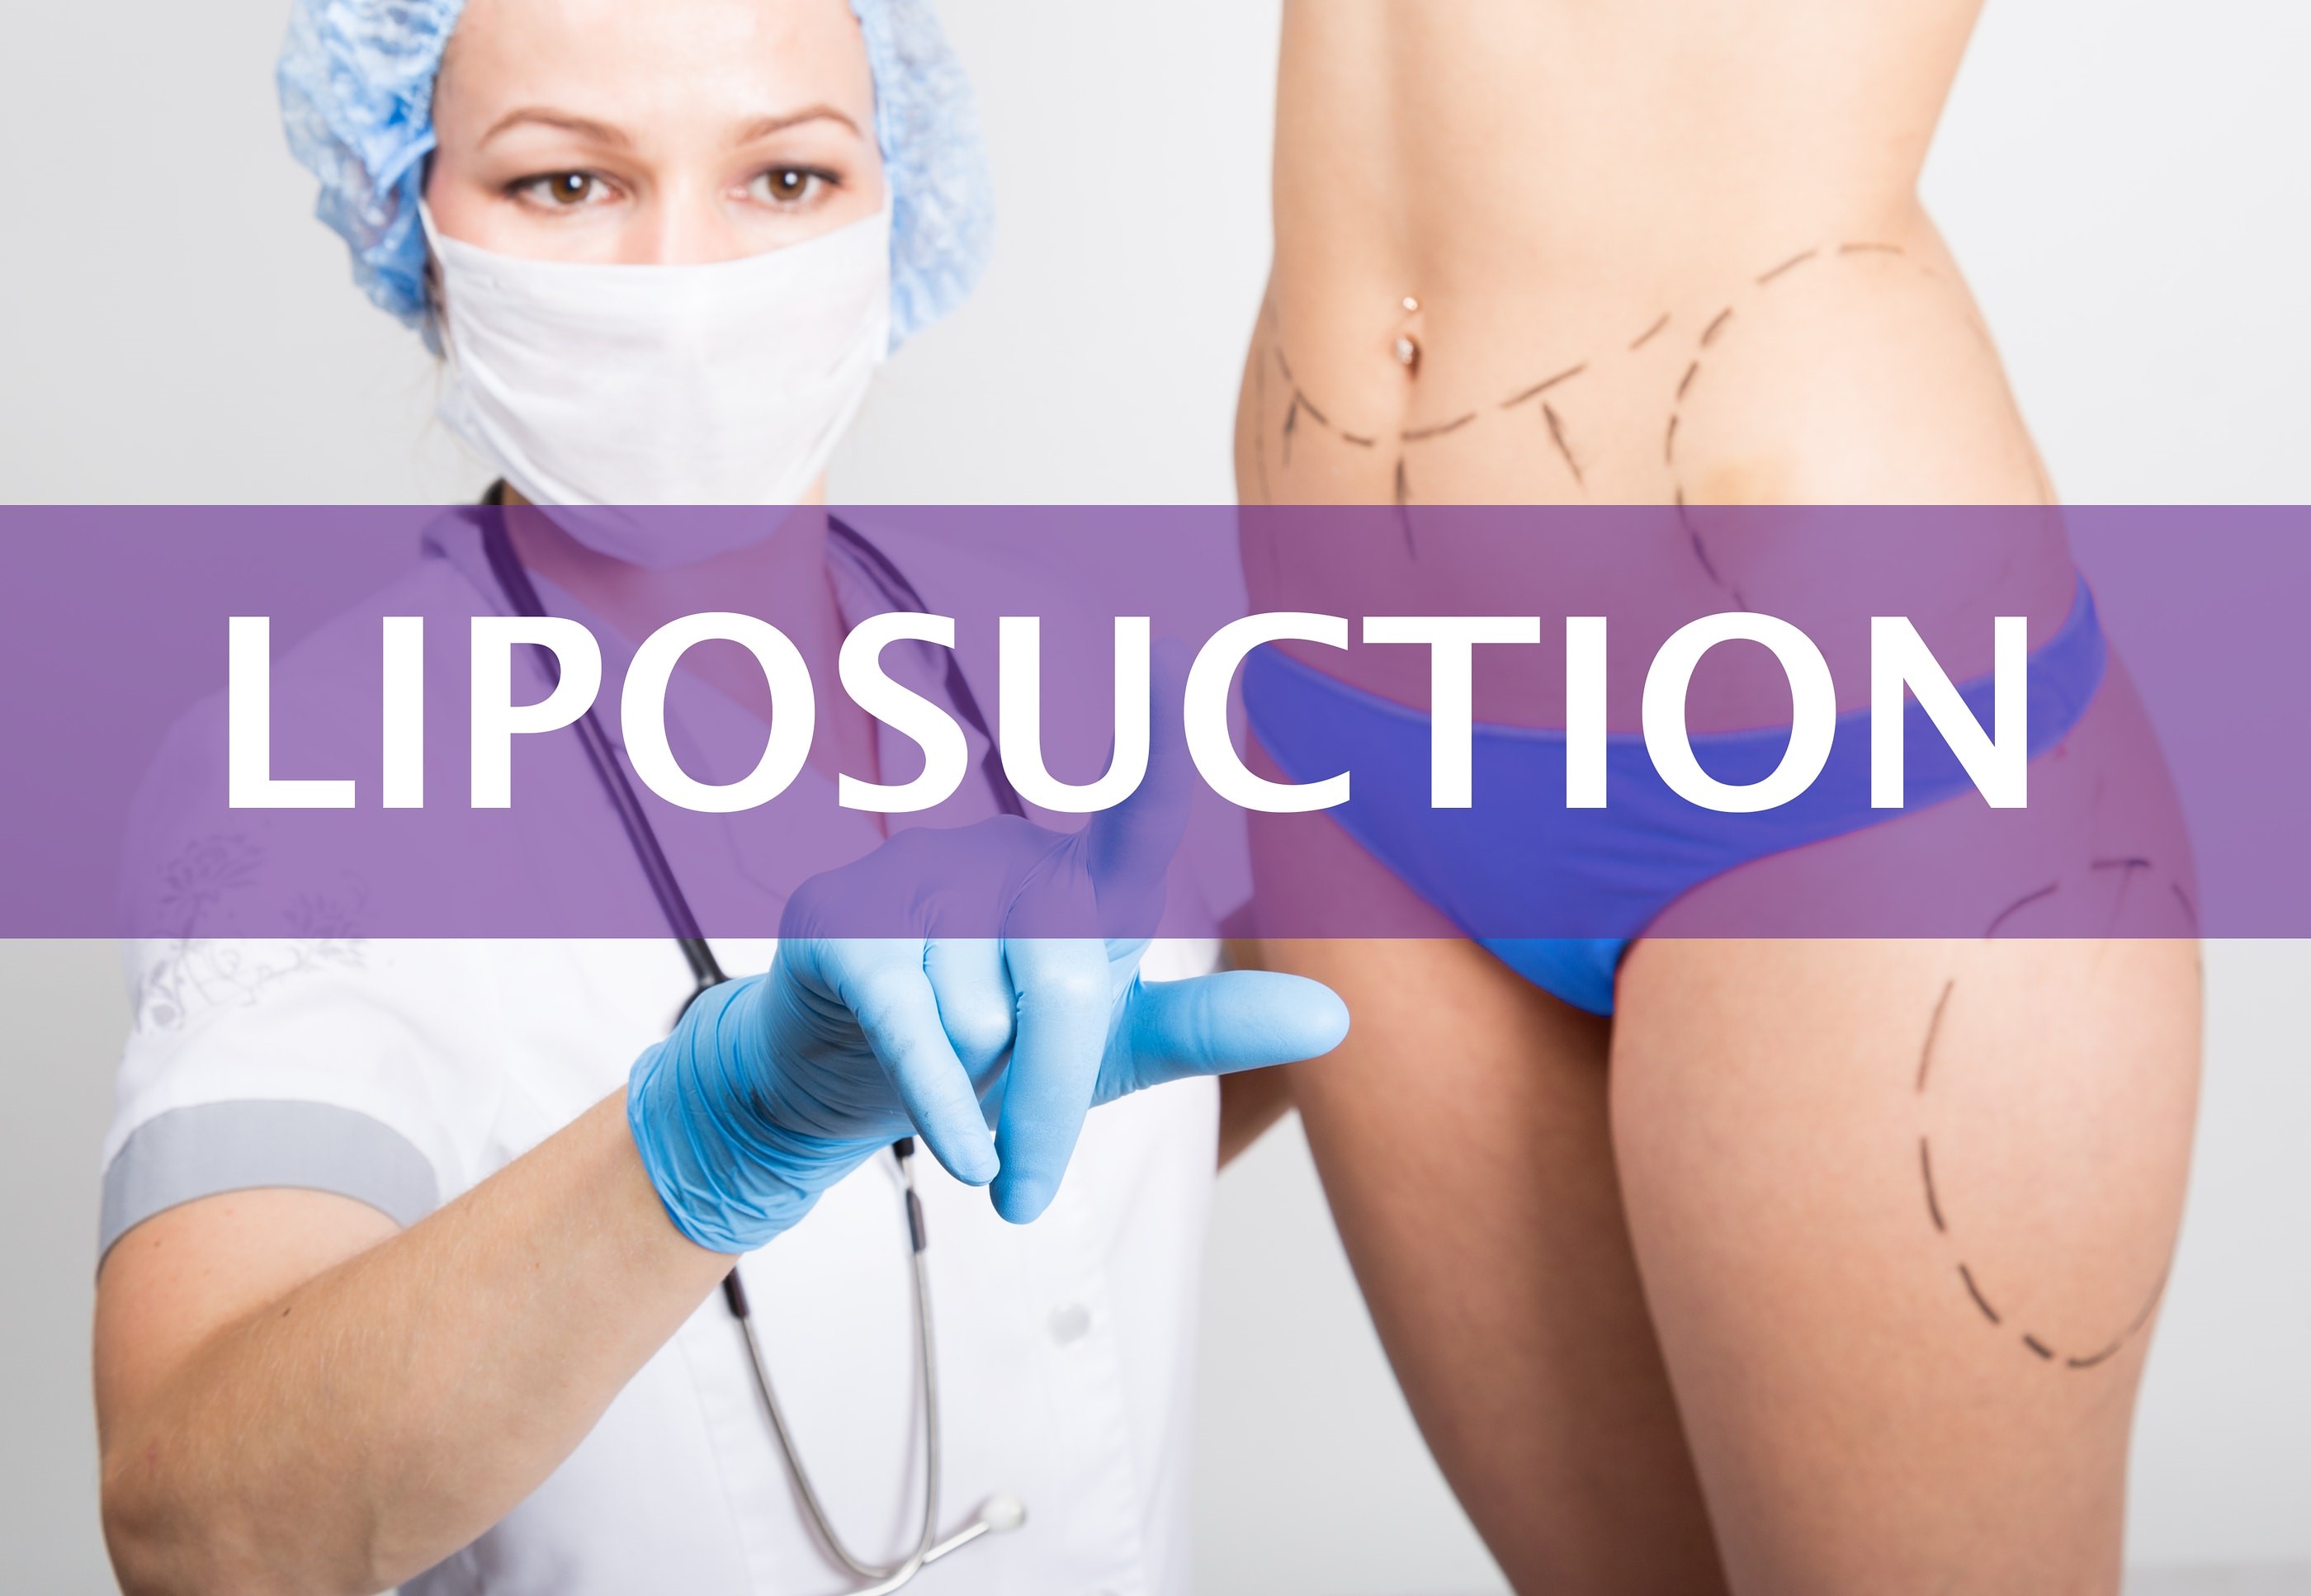 Dr. Trussler Liposuction